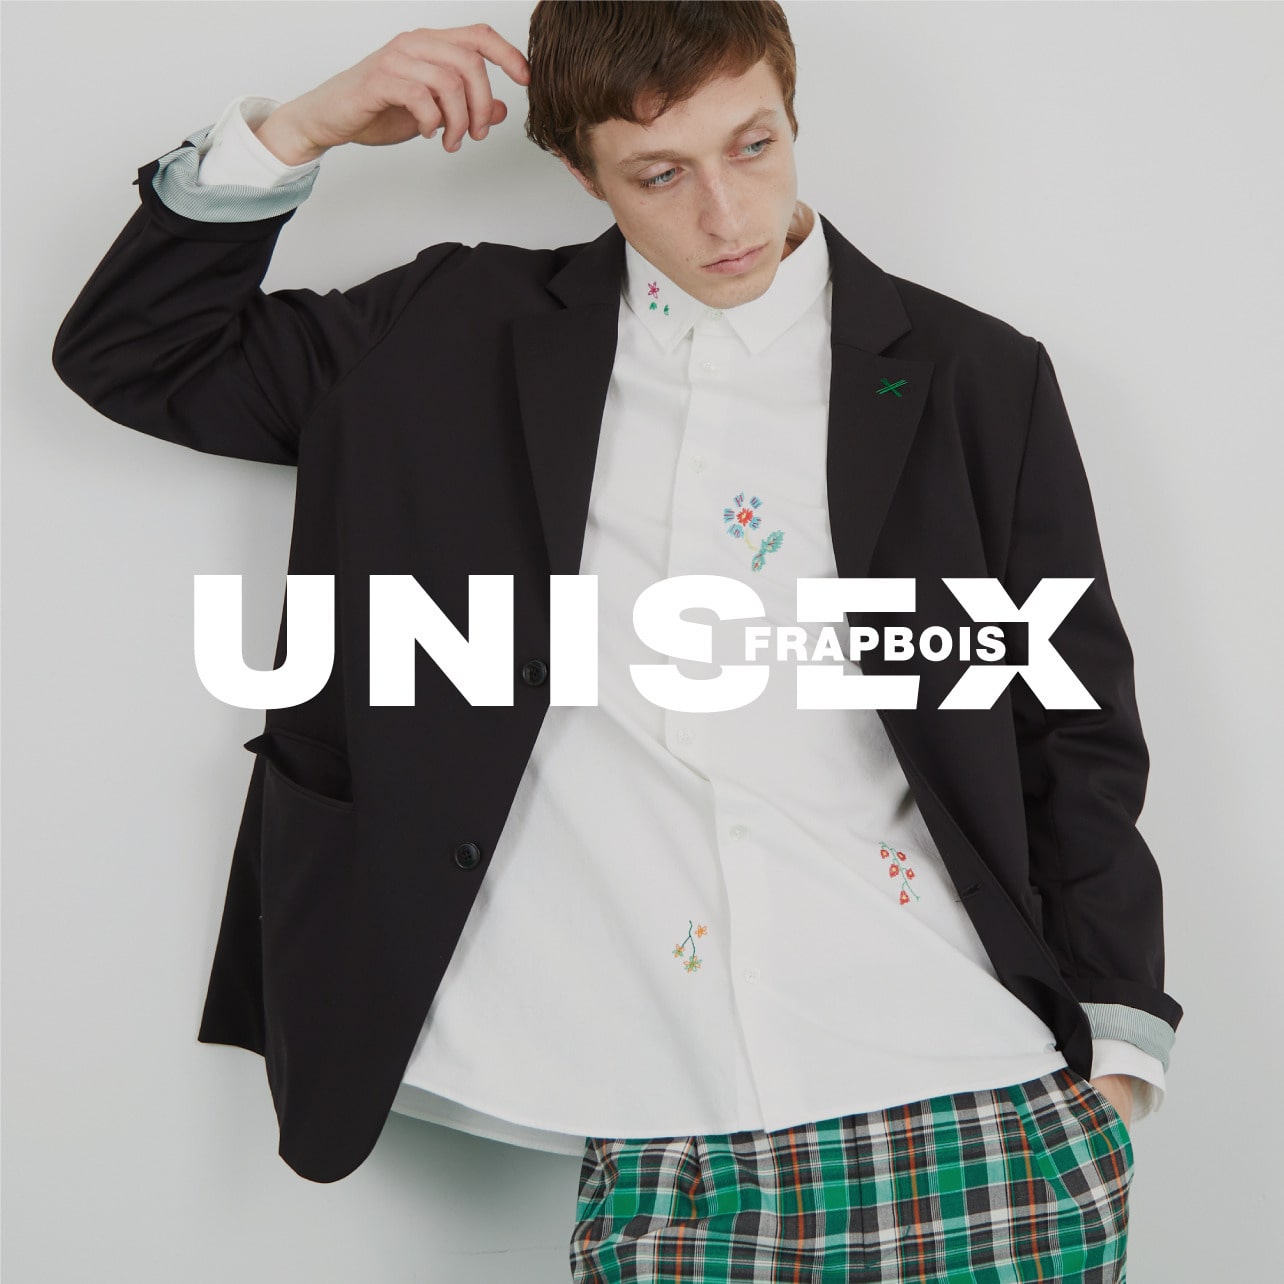 Unisex Items